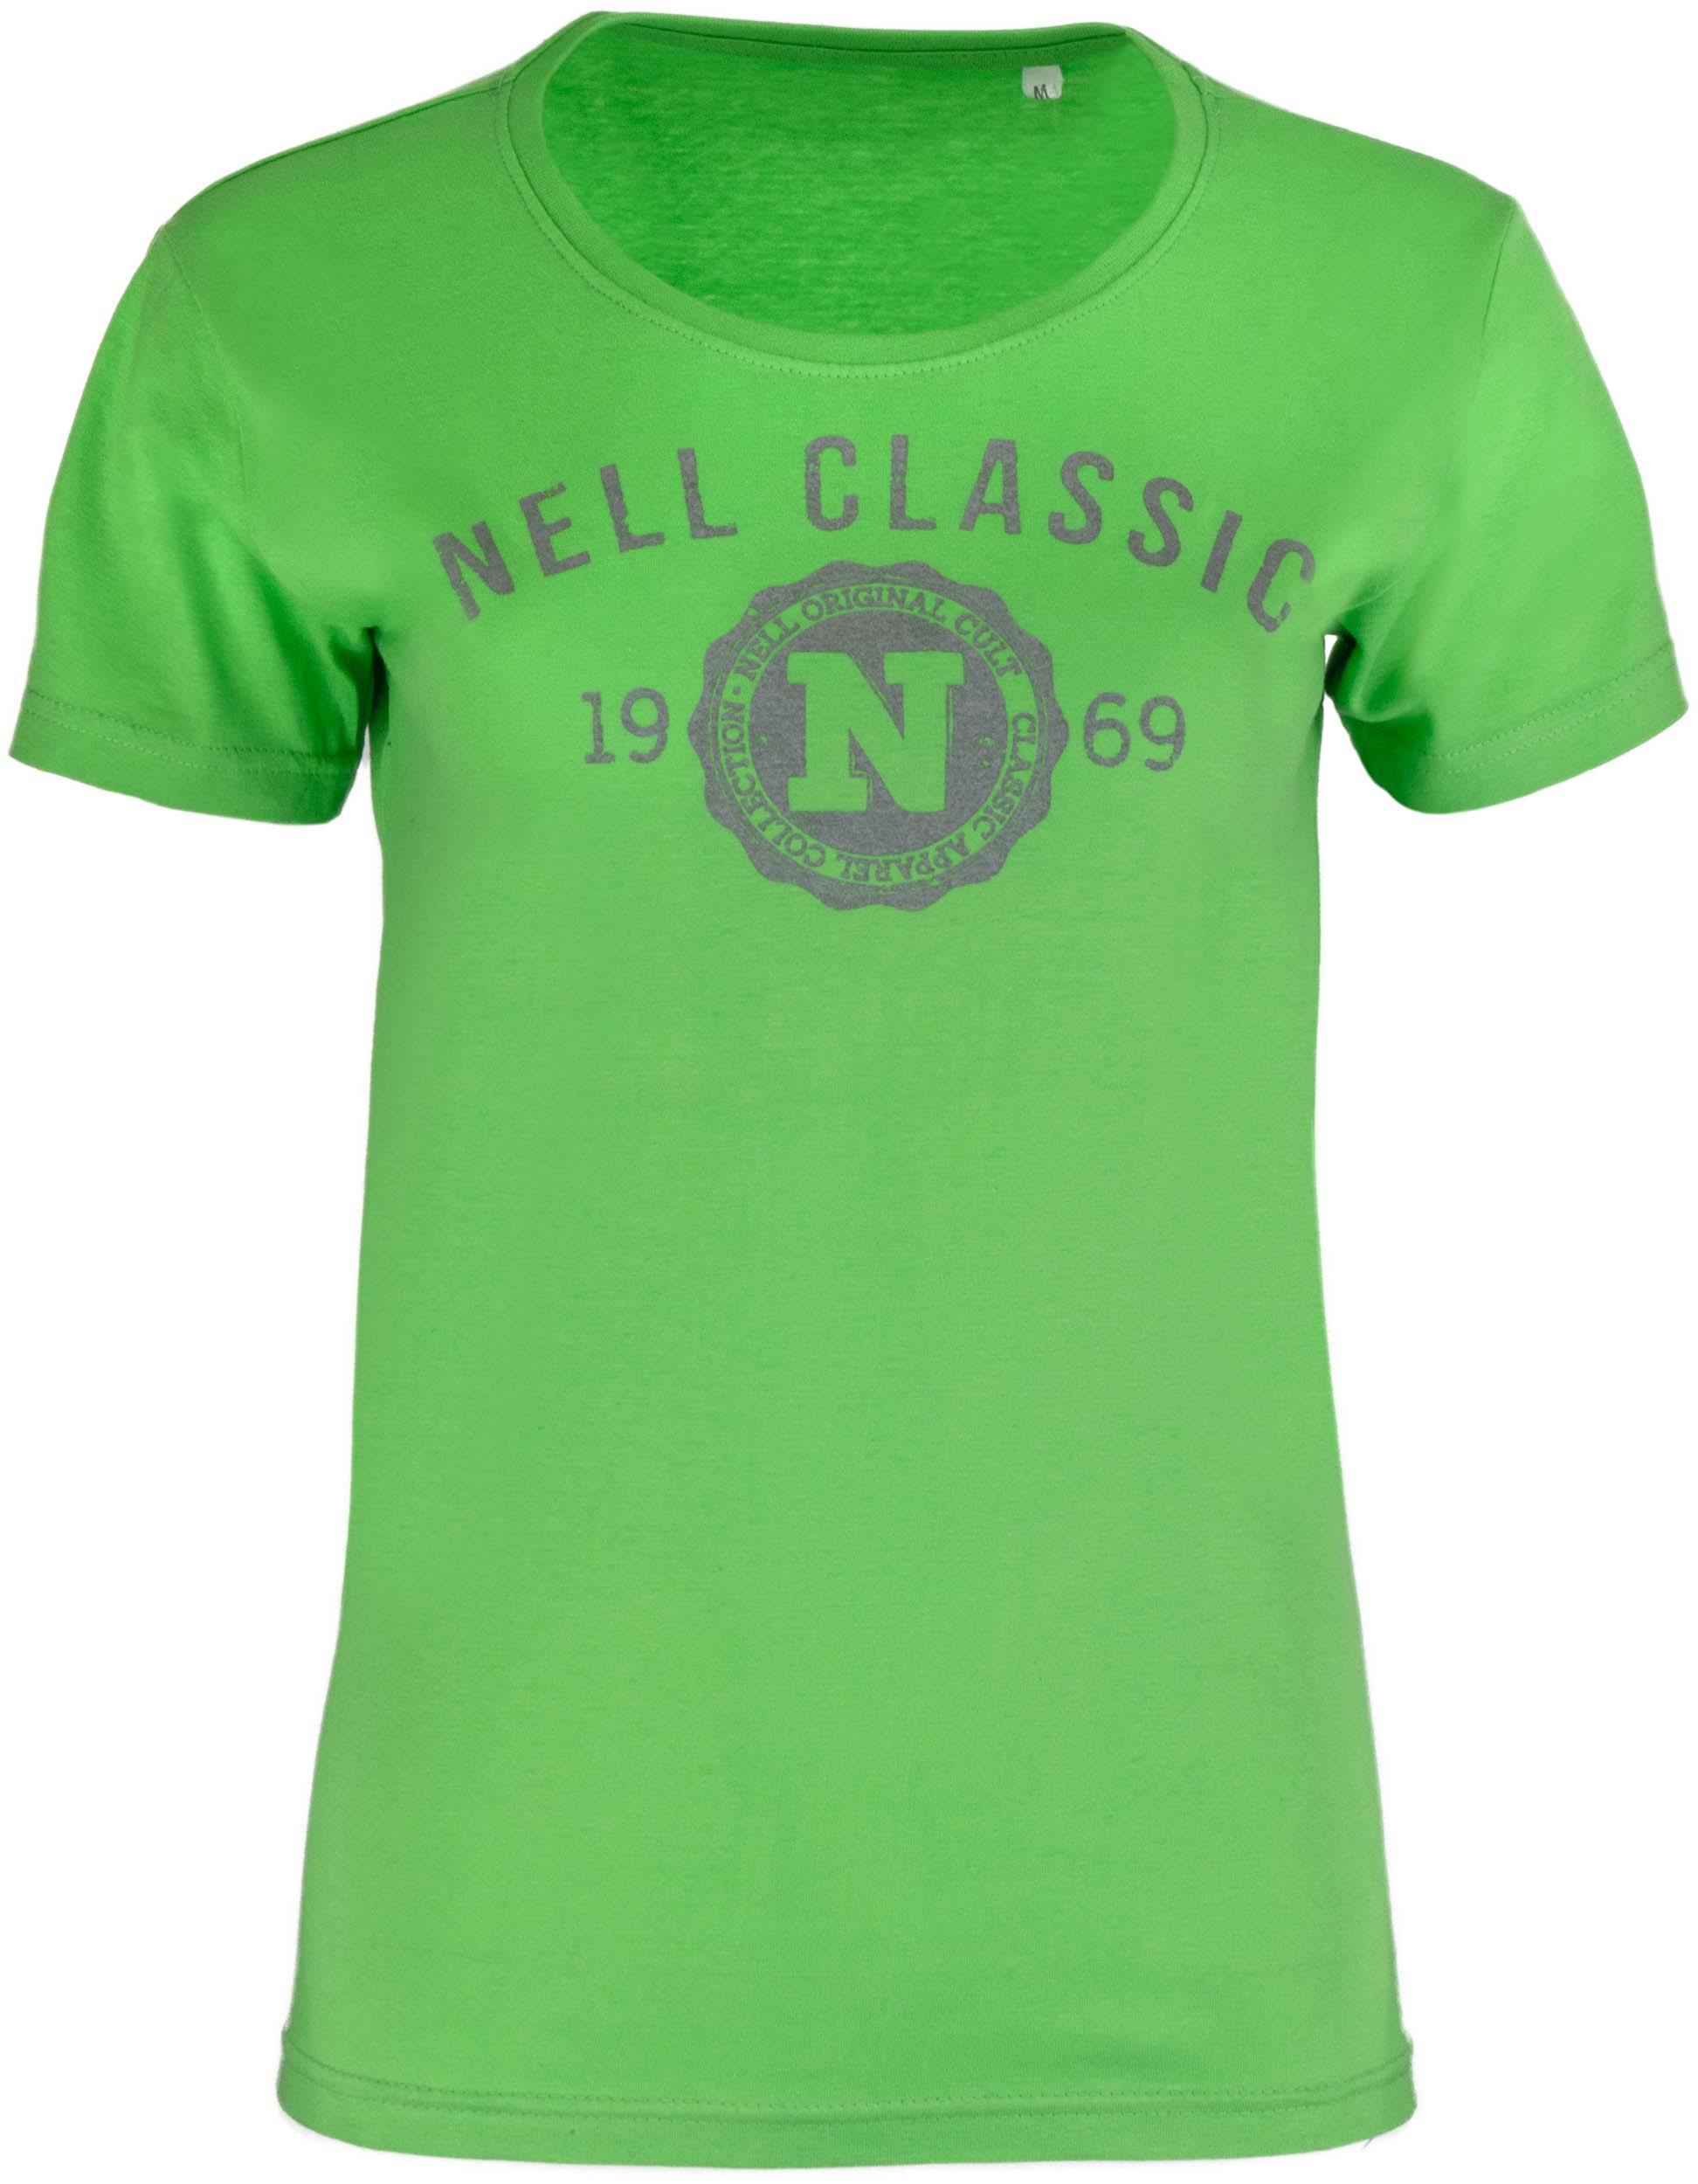 Dámské triko Nell Classic|XL